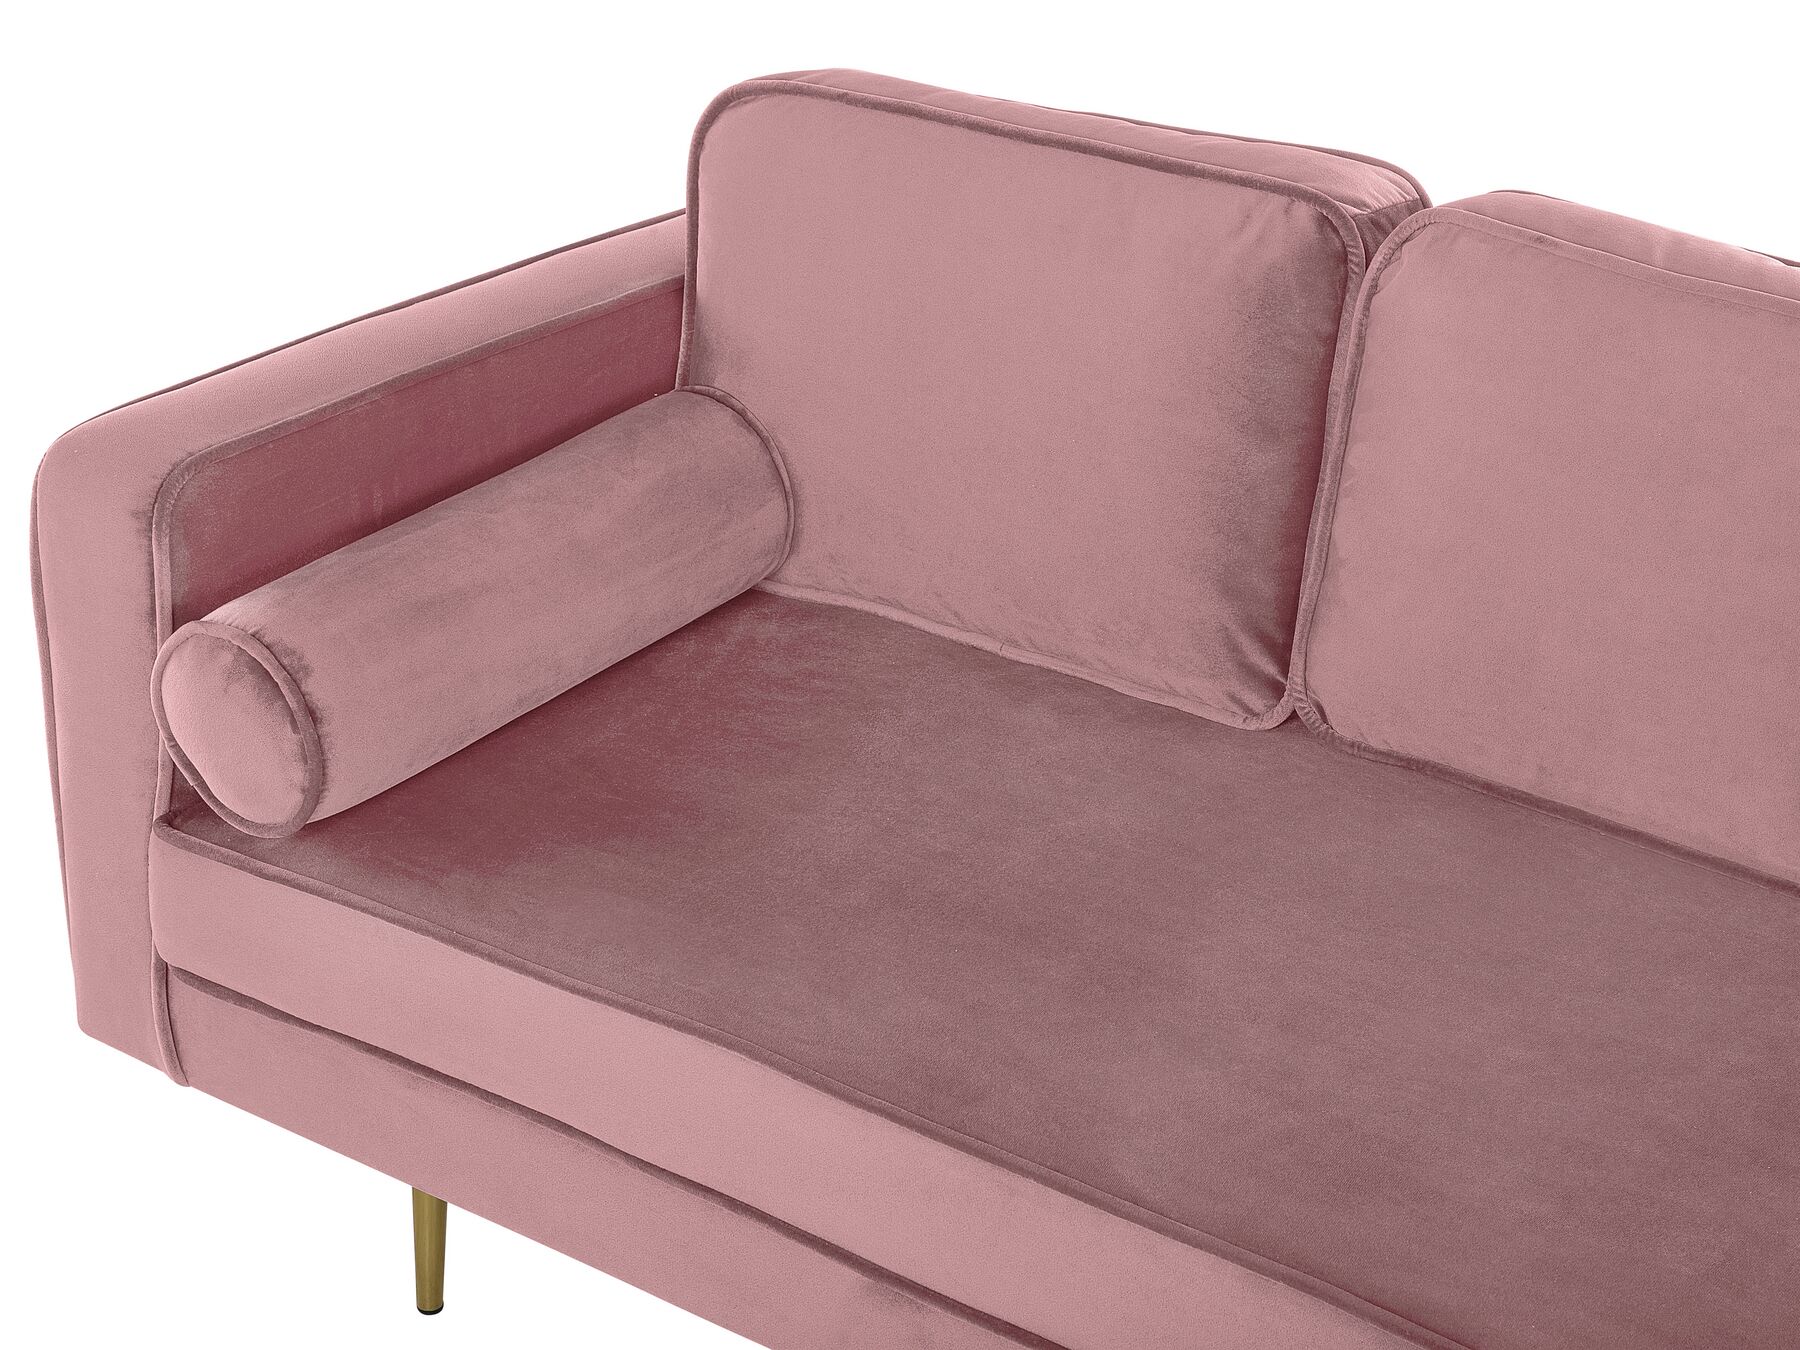 Miramas Left Hand Chaise Lounger (Pink)